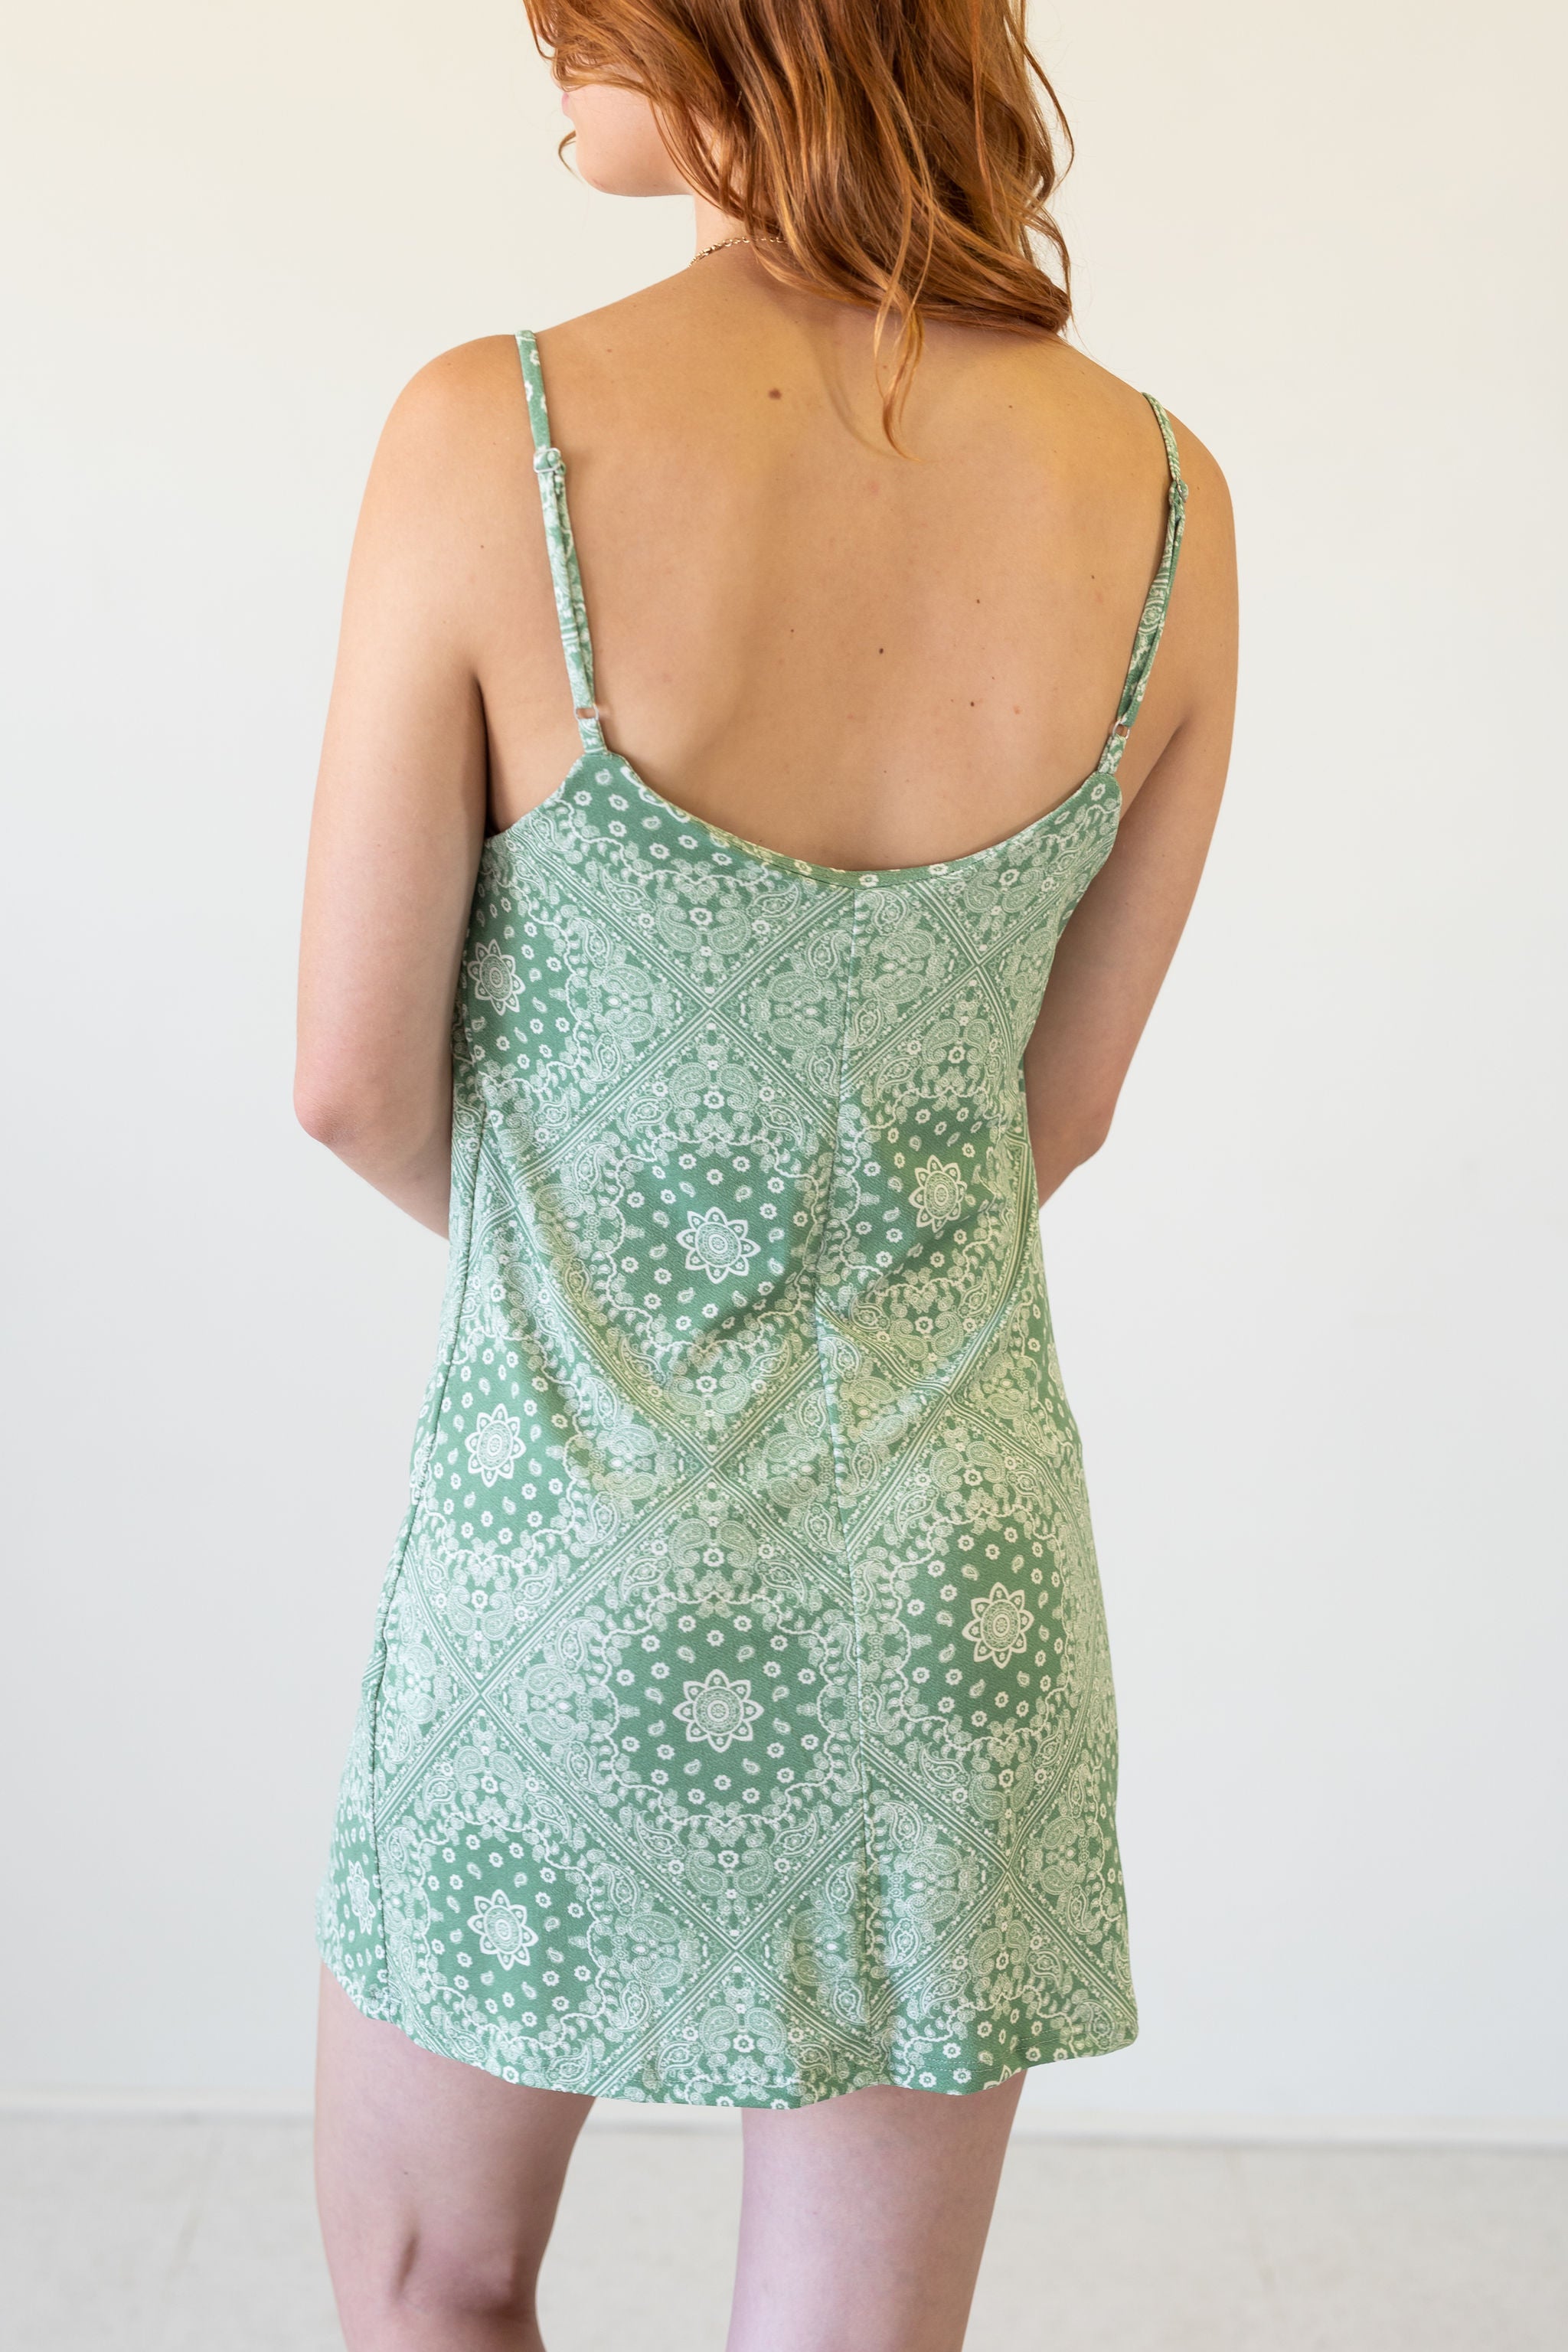 Sunrise Paisley Print Cami Dress